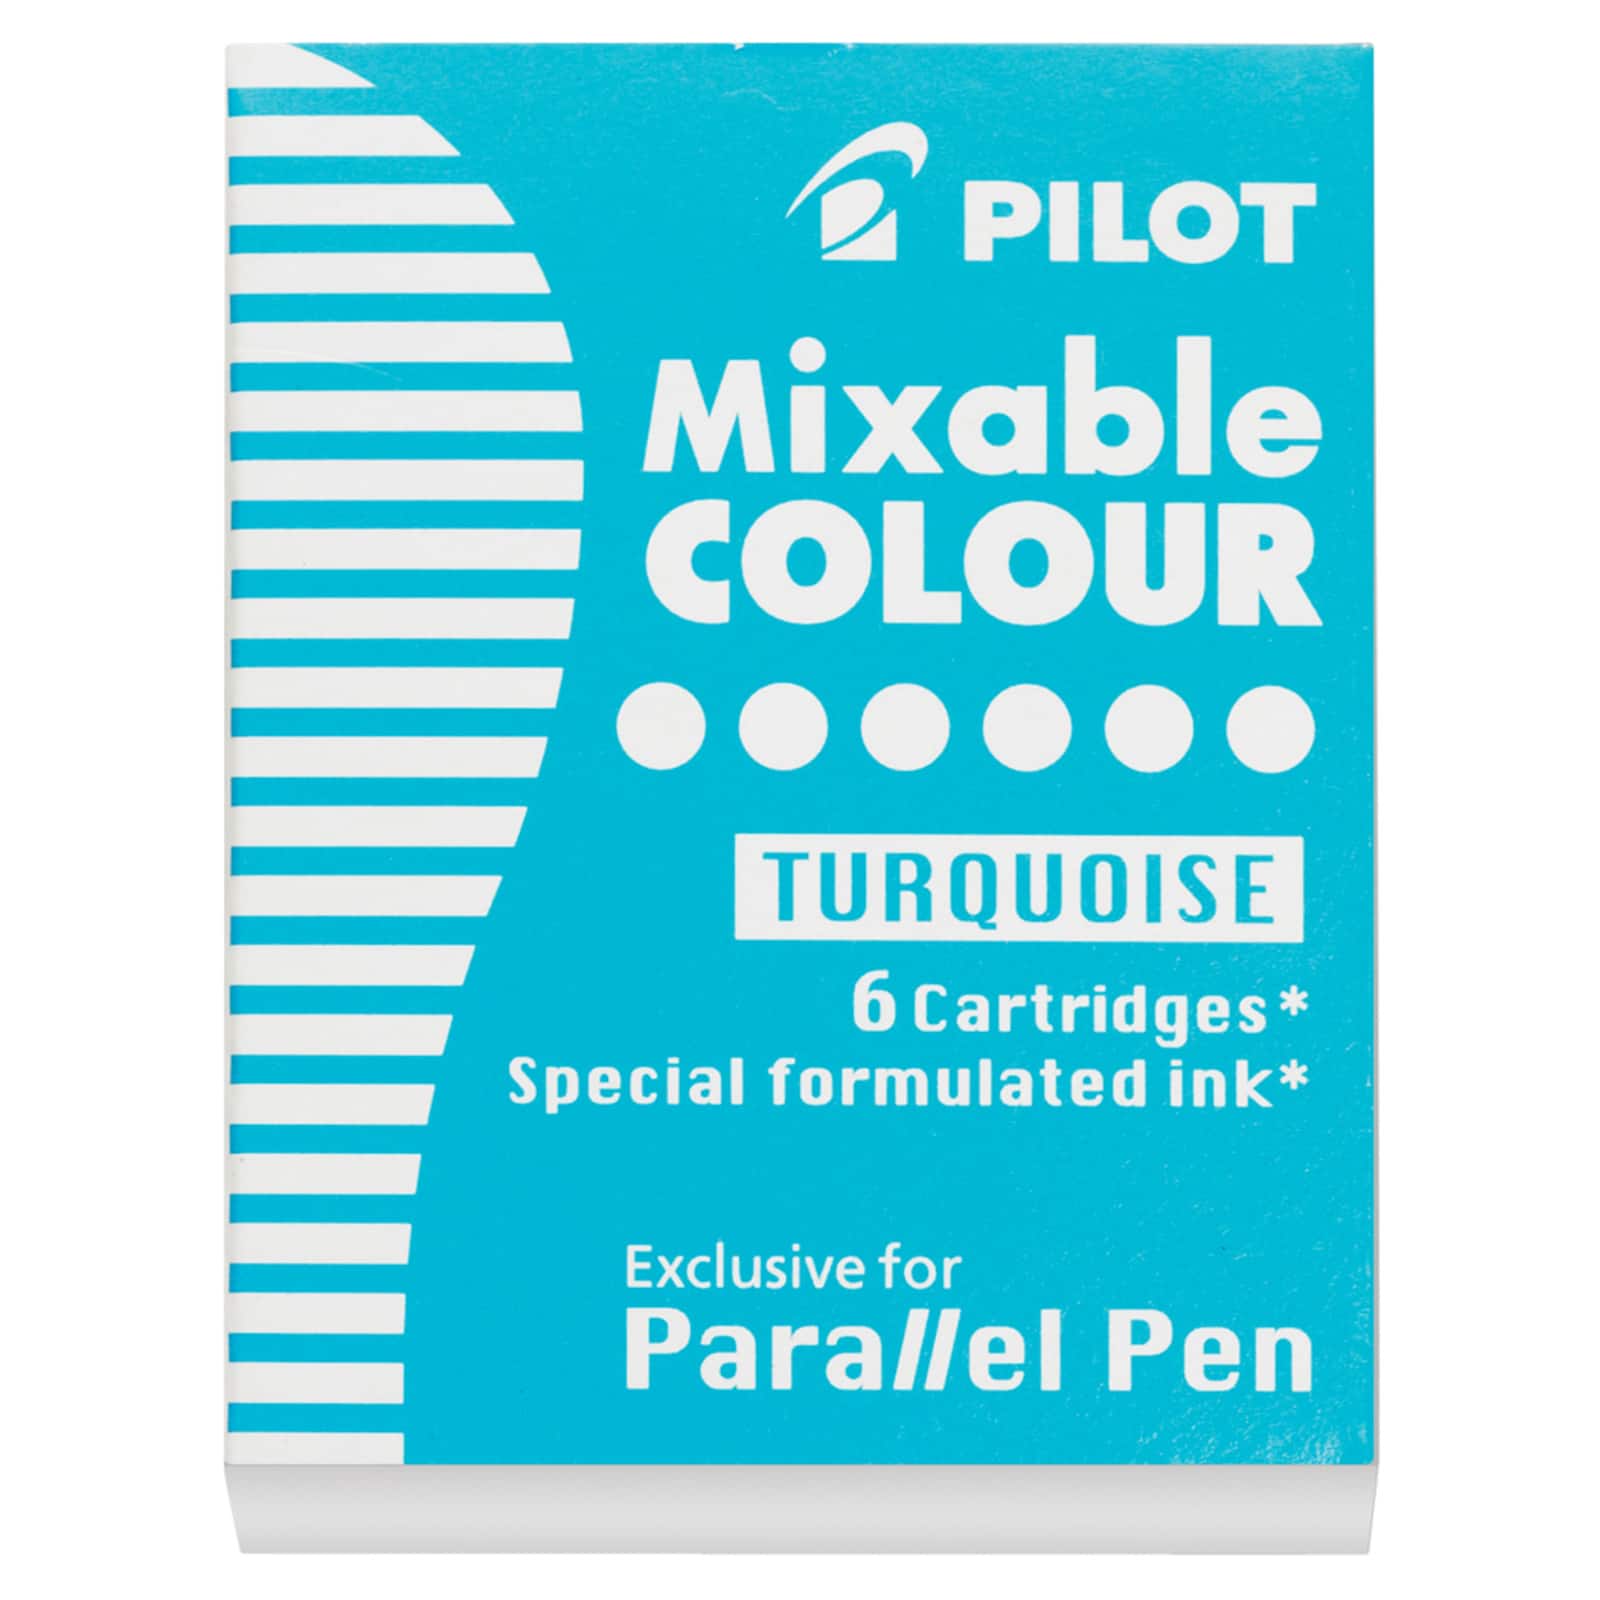 Pilot Parallel Pens and Refills